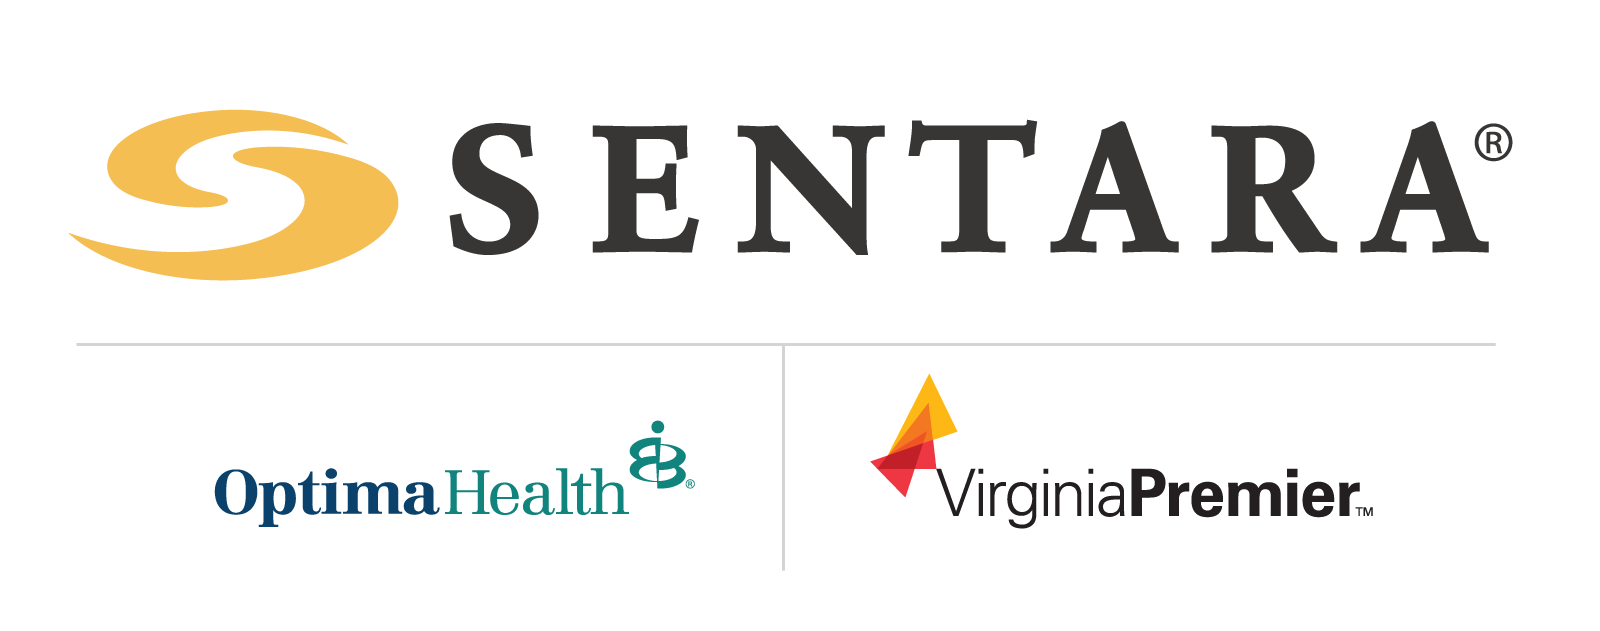 1. Sentara Healthcare (Statewide)